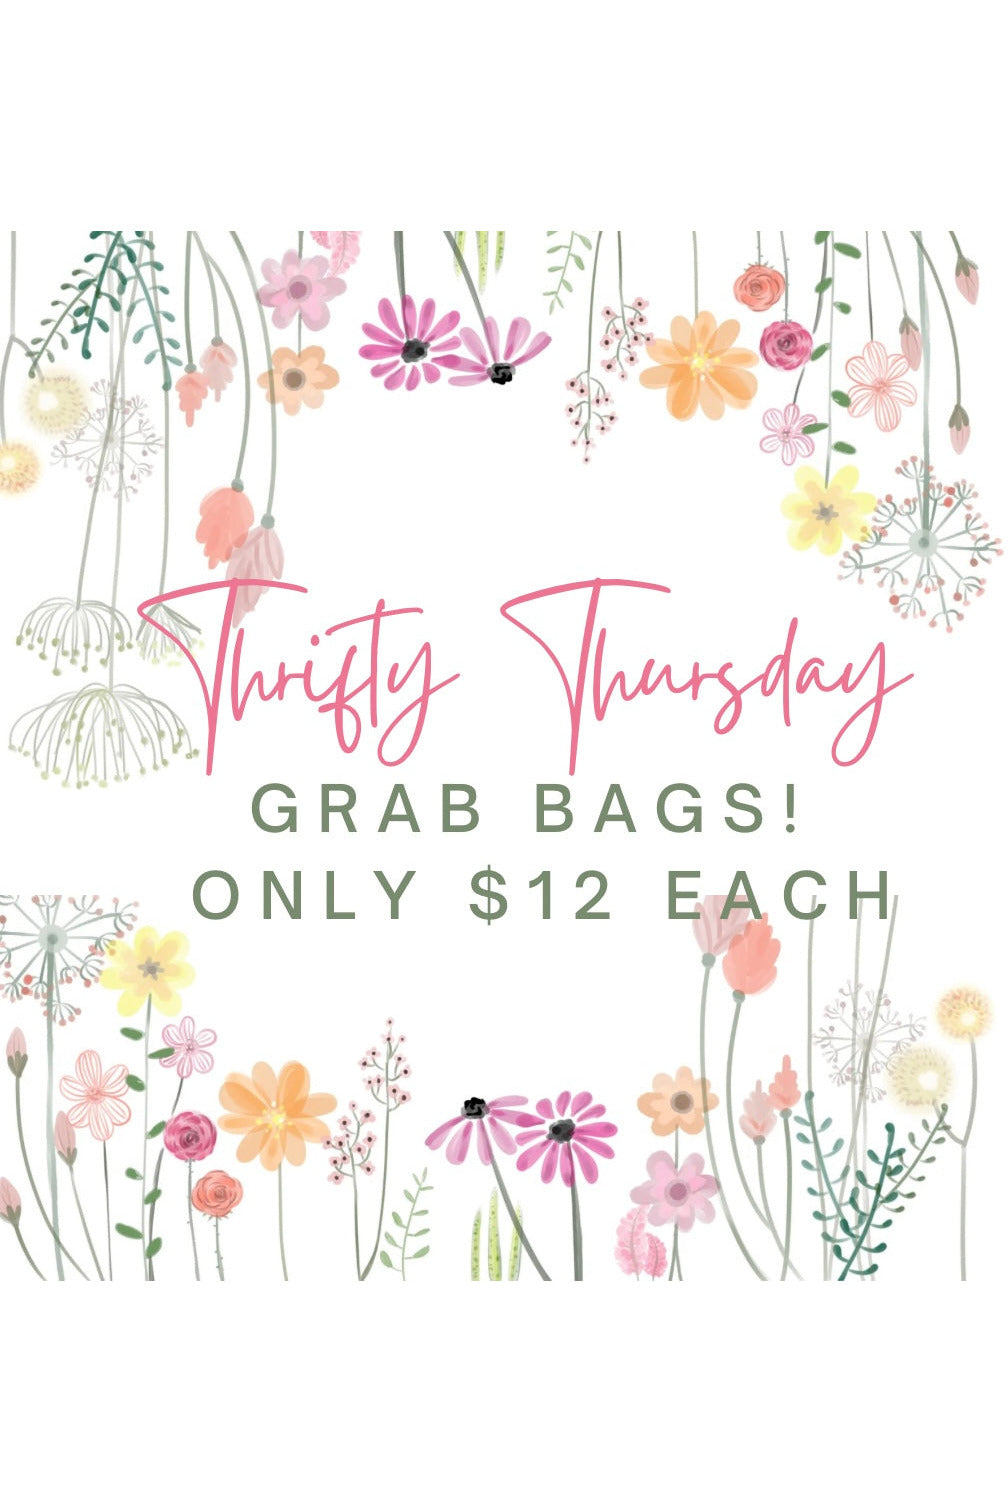 Thrifty Thursday Grab Bag